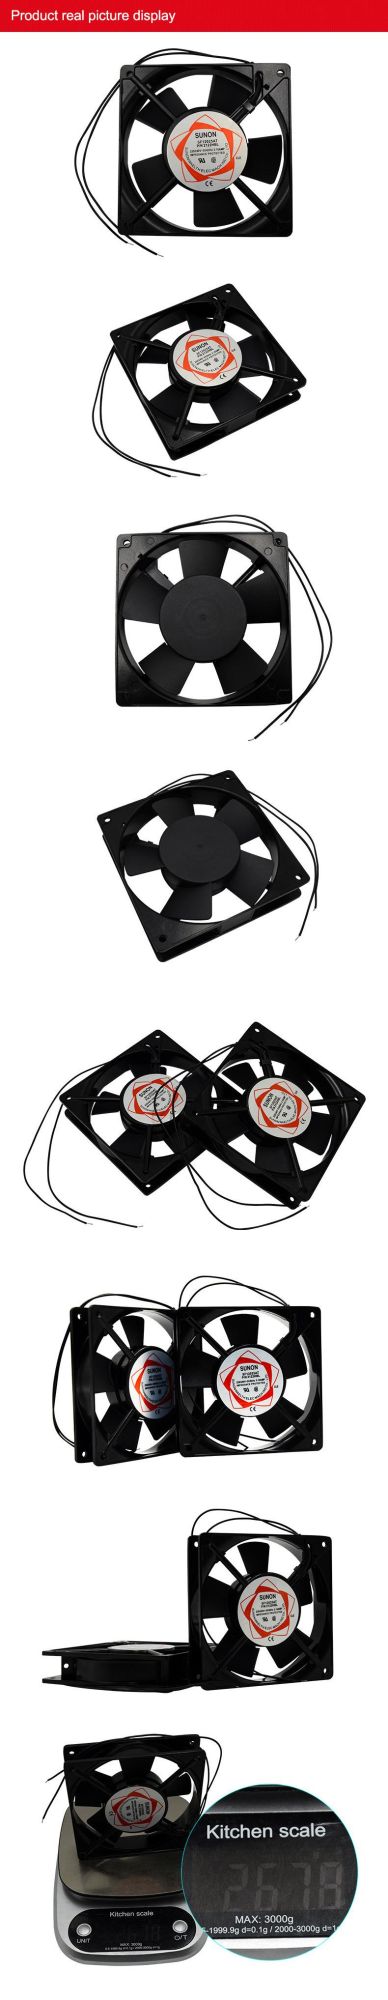 Spare Parts of Mini Egg Incubator /Mini Egg Incubator Fans Fan 0.25A + 120mm AC Cooling Fan for Incubator